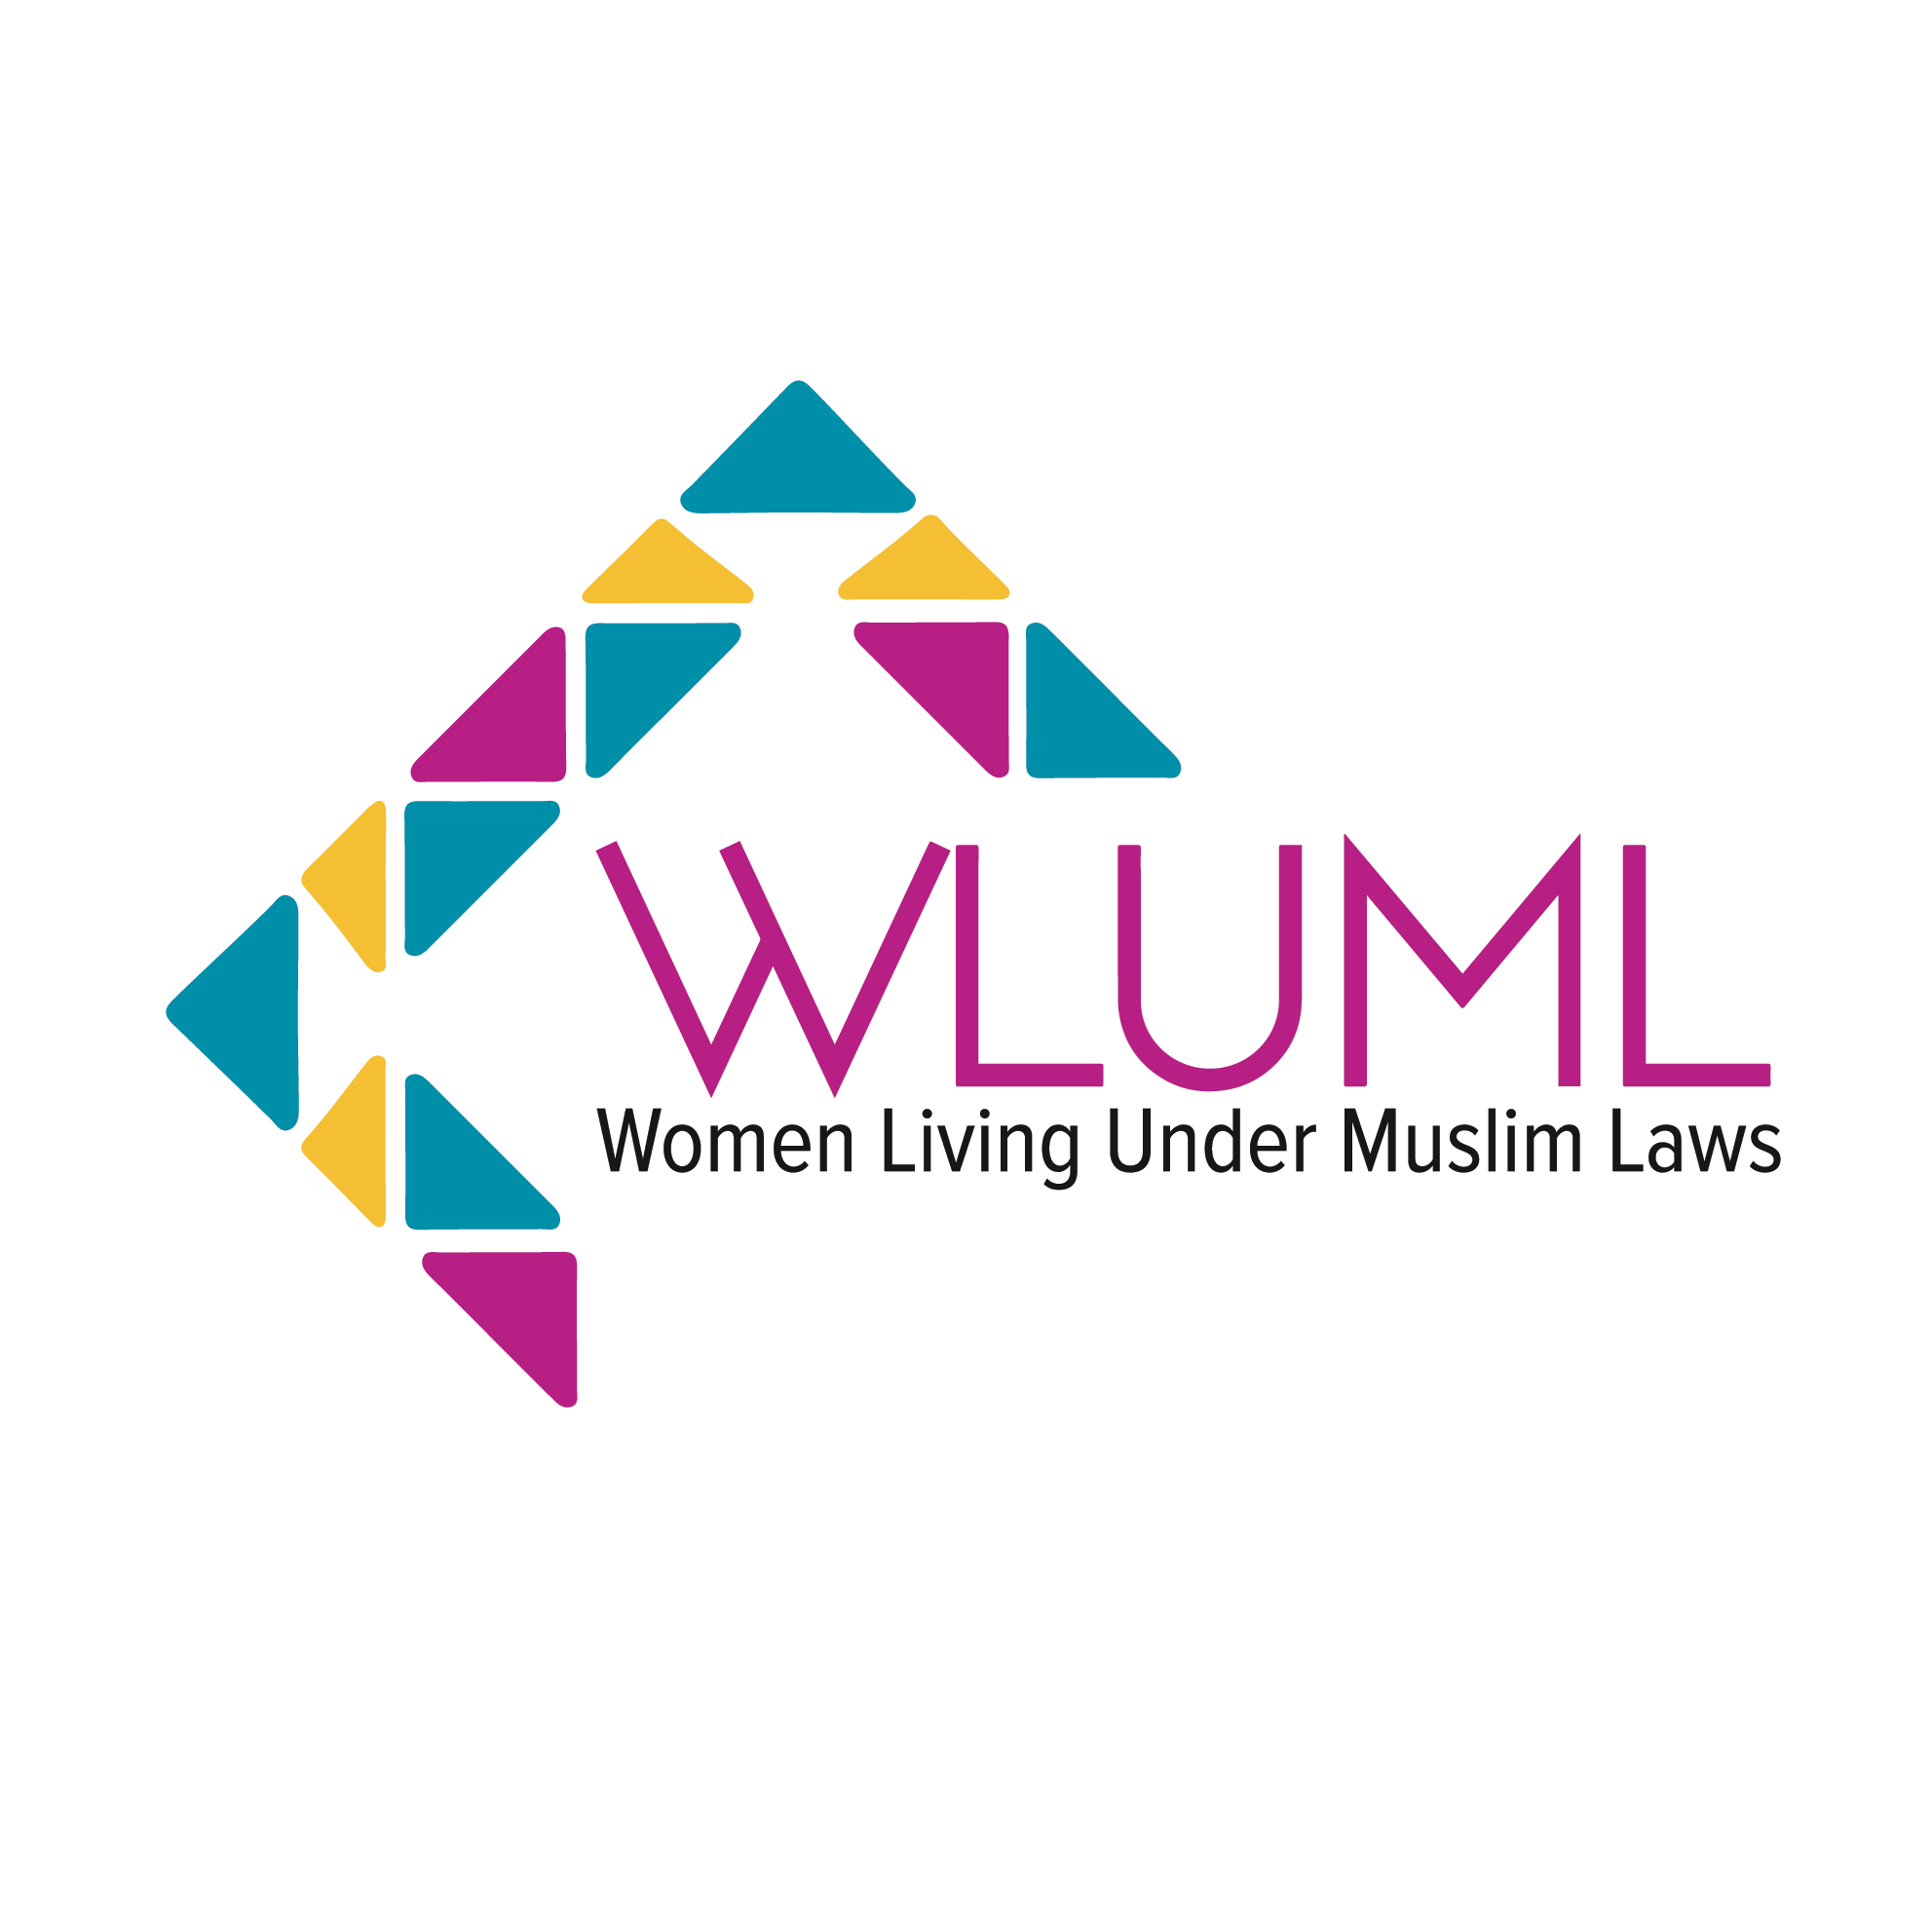 Please Donate to Women Living Under Muslim Laws (WLUML)